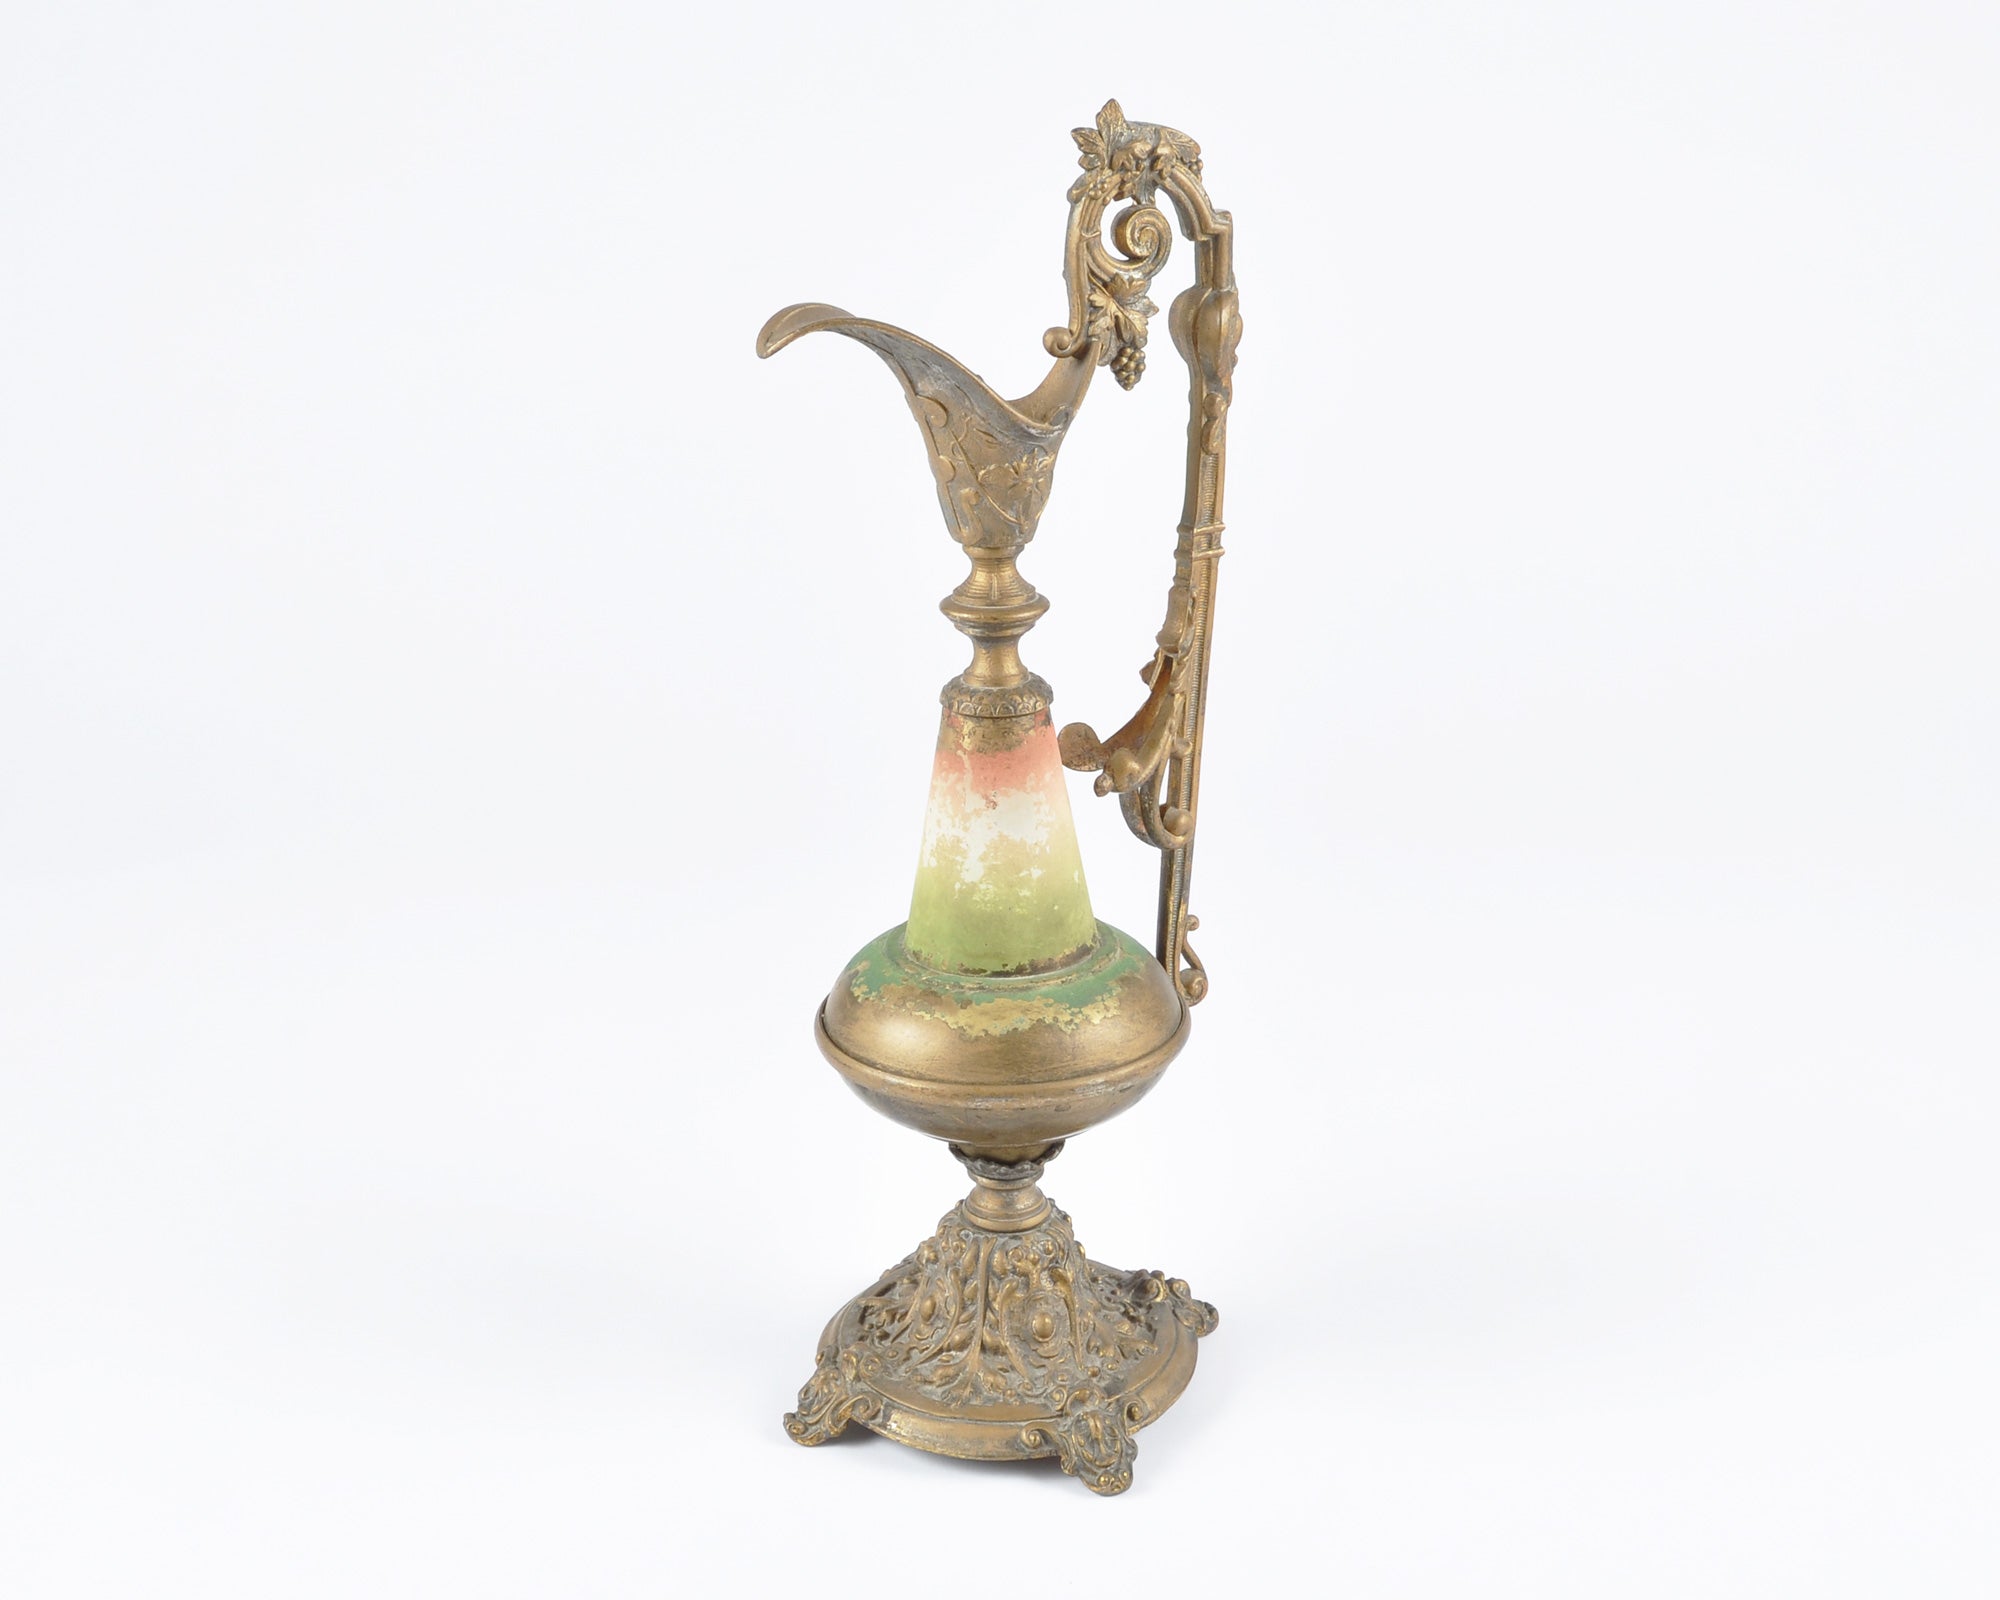 Vintage Antique Victorian Retro Art Deco-Mid Century Modern-Contemporary Mantle Glass Hand Painted Metal Ewer Vase Pitcher-Decorative Décor Tamara Scott Designs